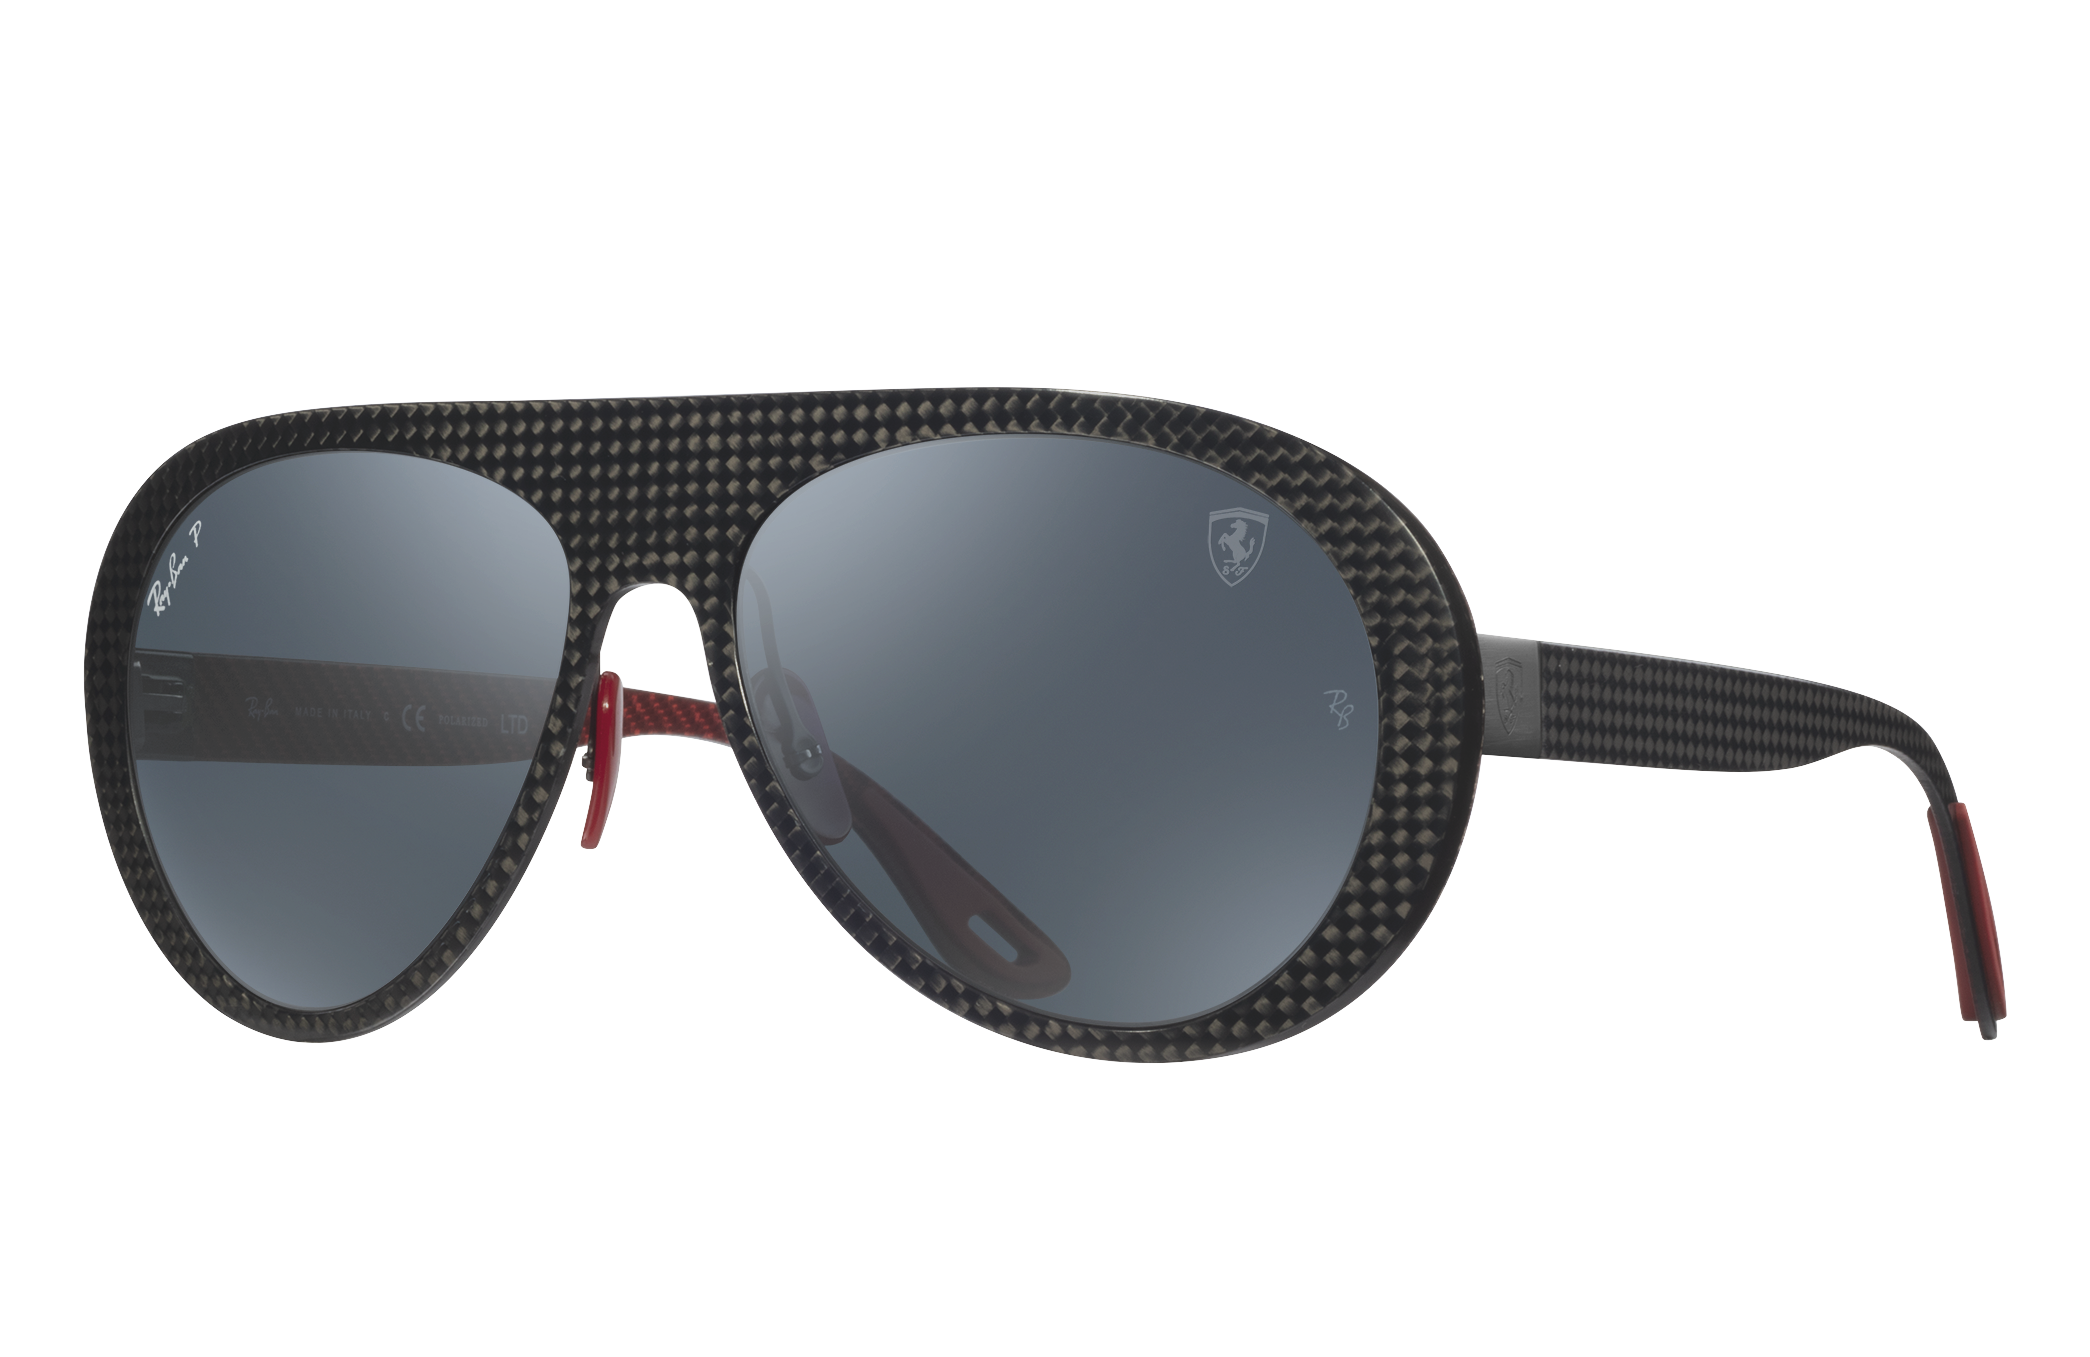 Scuderia Ferrari Italy Limited Edition Sunglasses in Gunmetal and Blue  Chromance | Ray-Ban®